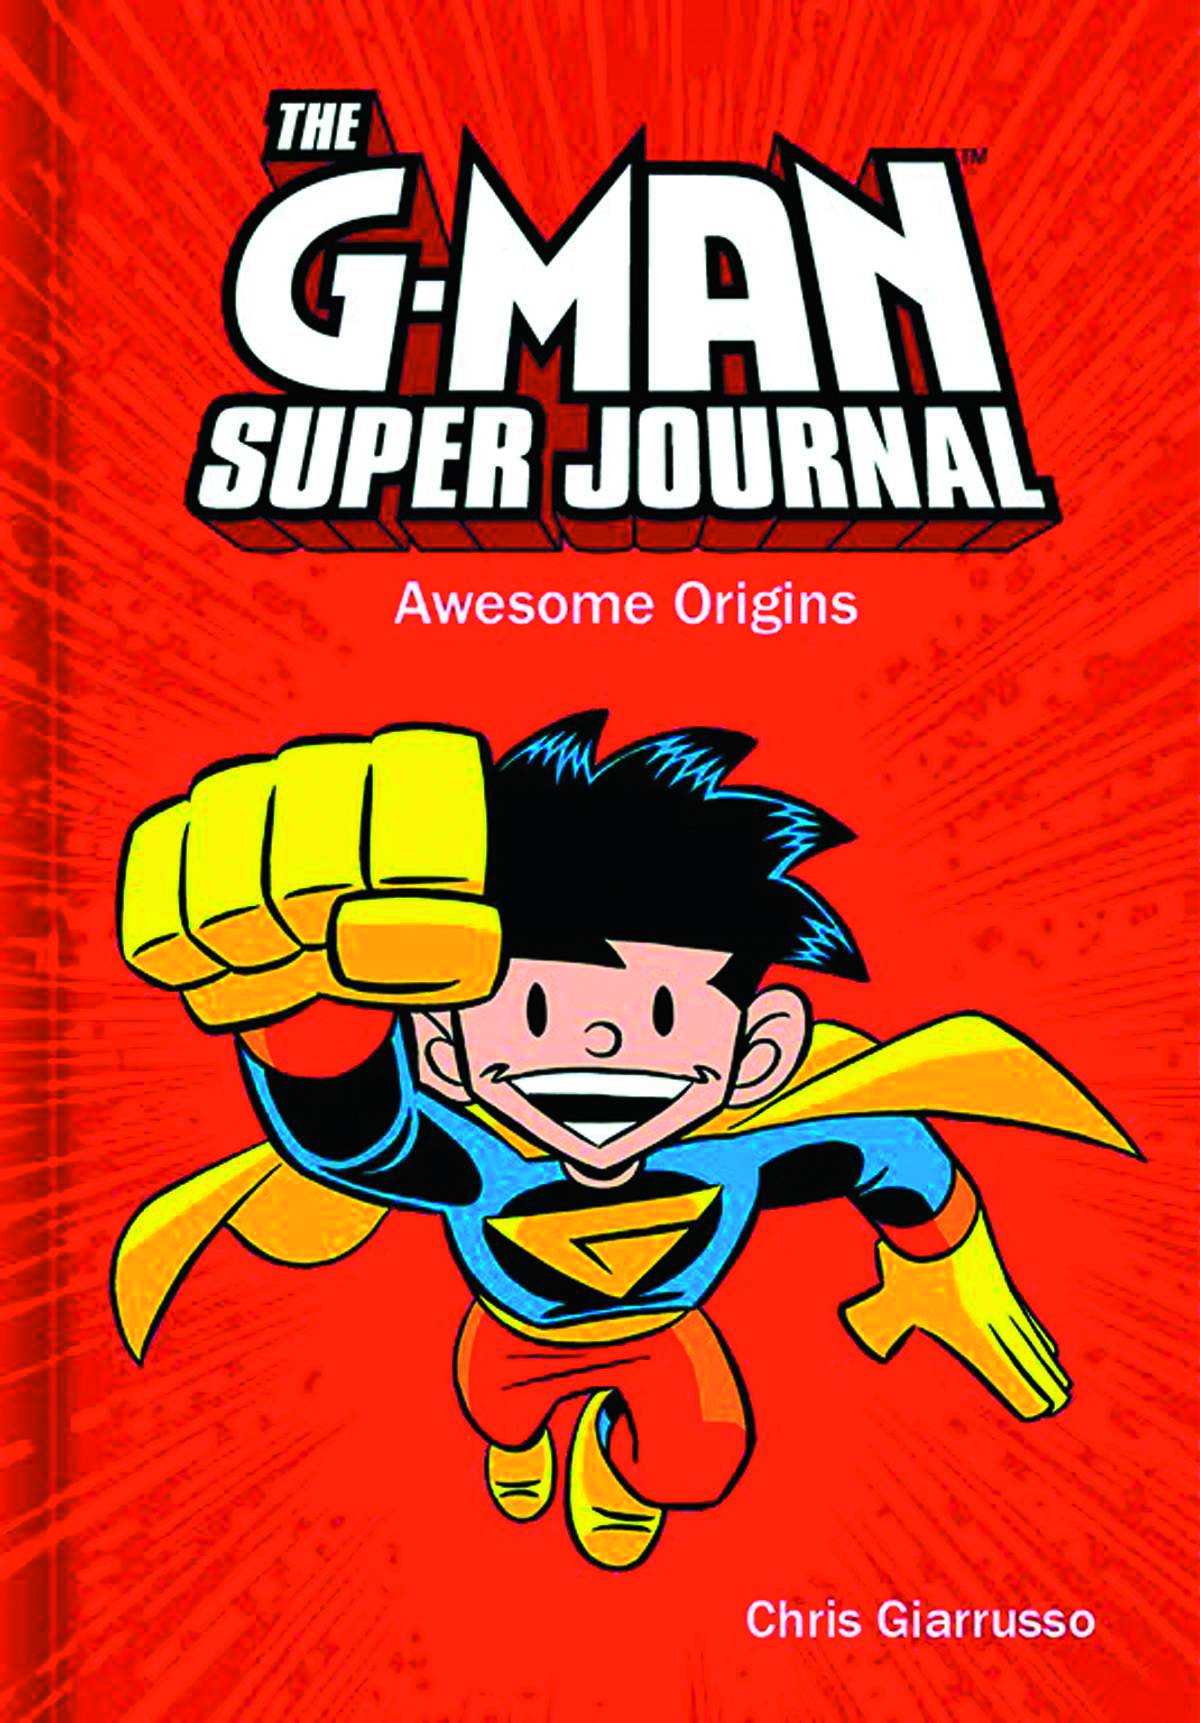 G-Man Super Journal Awesome Origins